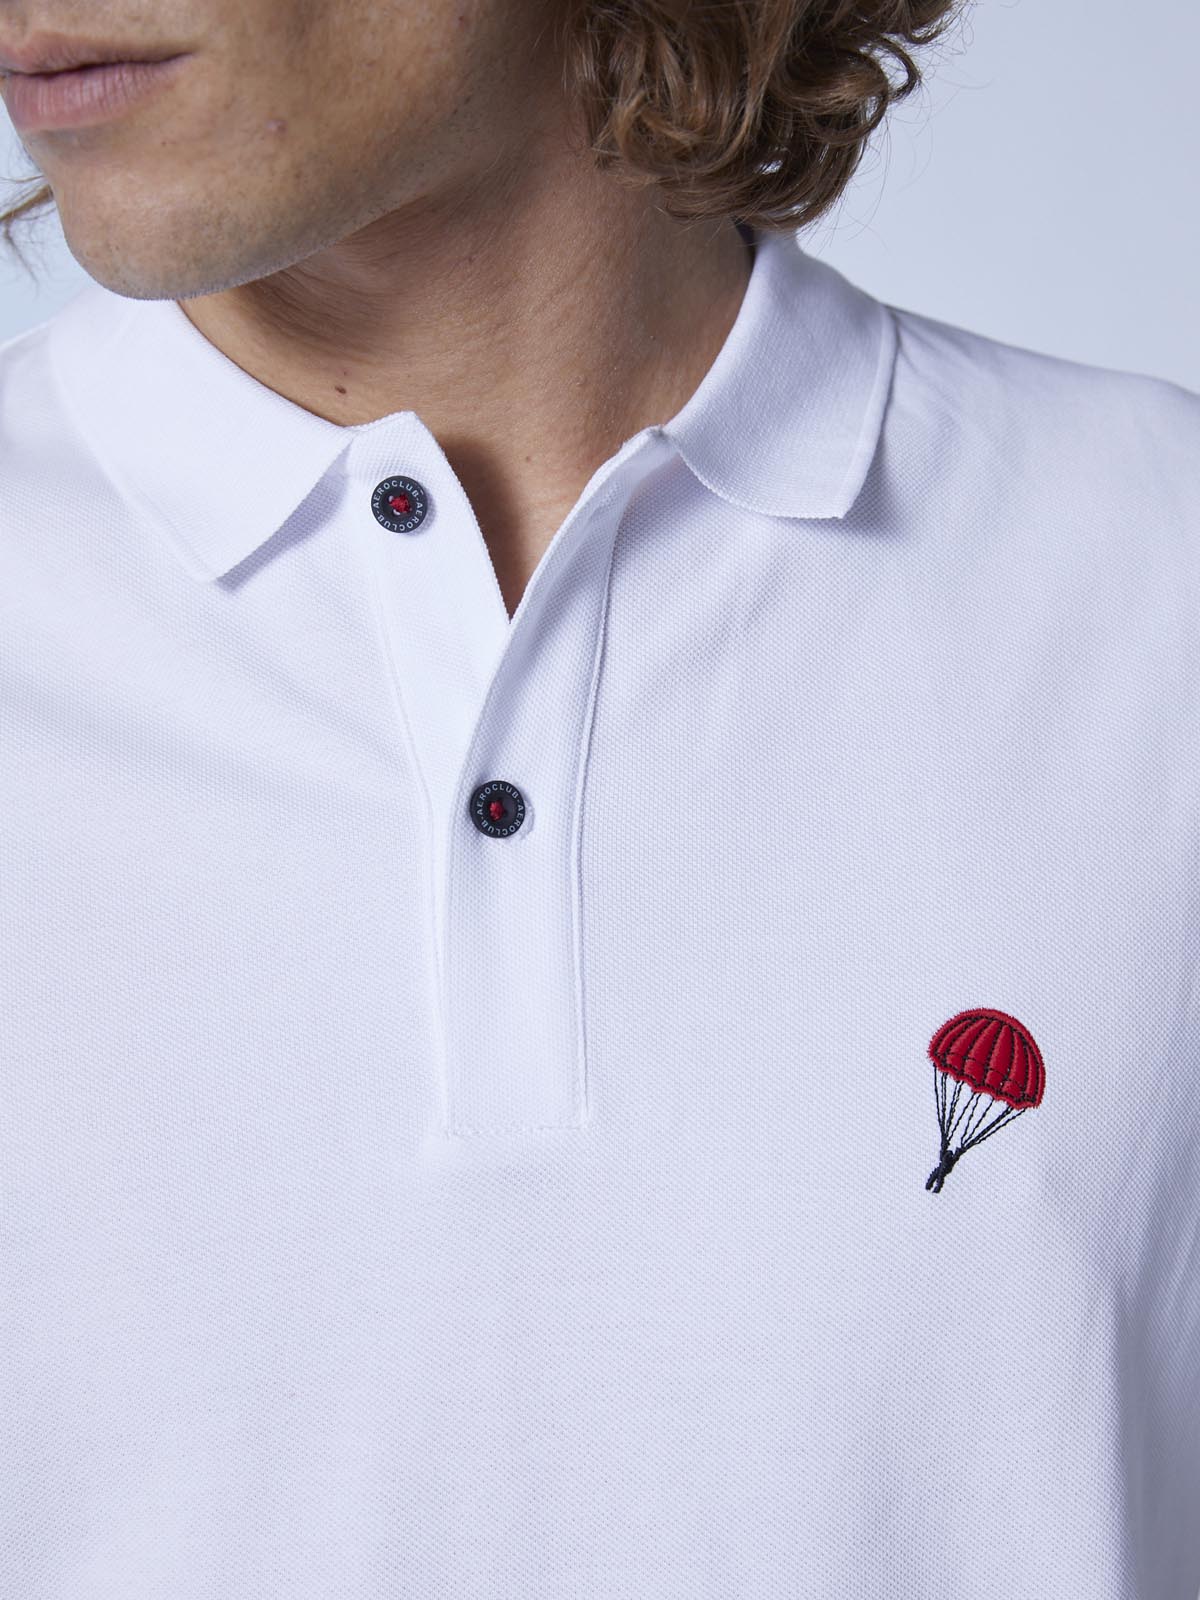 Baran parachute embroidered Polo shirt